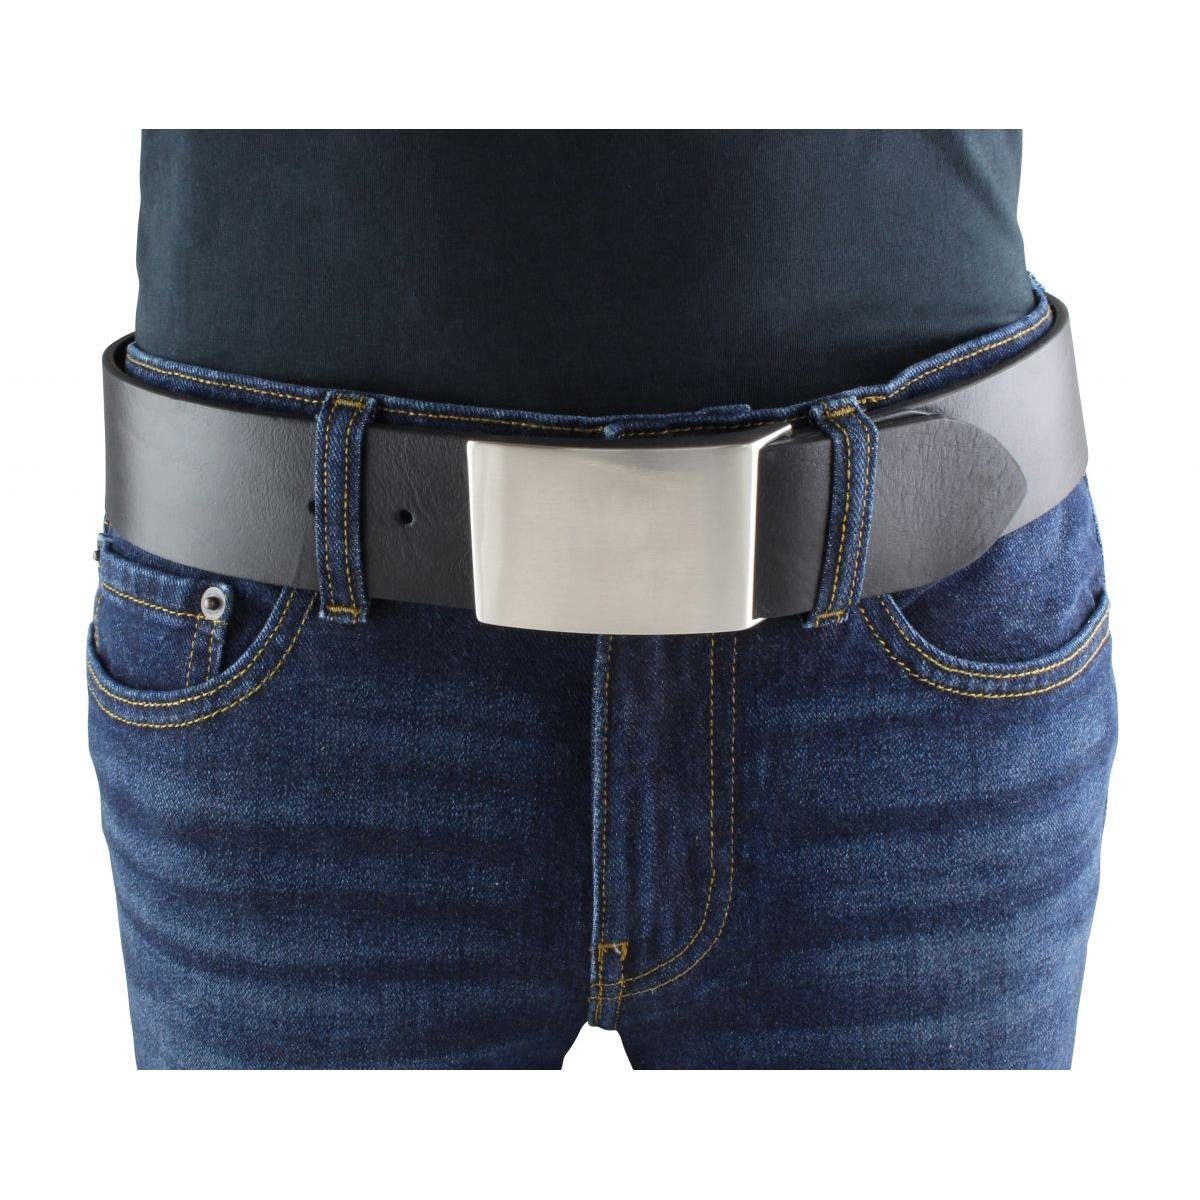 Vollrindleder 5,0 Herren Ledergürtel aus - Jeans-Gürtel Silber für Gürtel 50mm cm - Weiß, BELTINGER Jeans